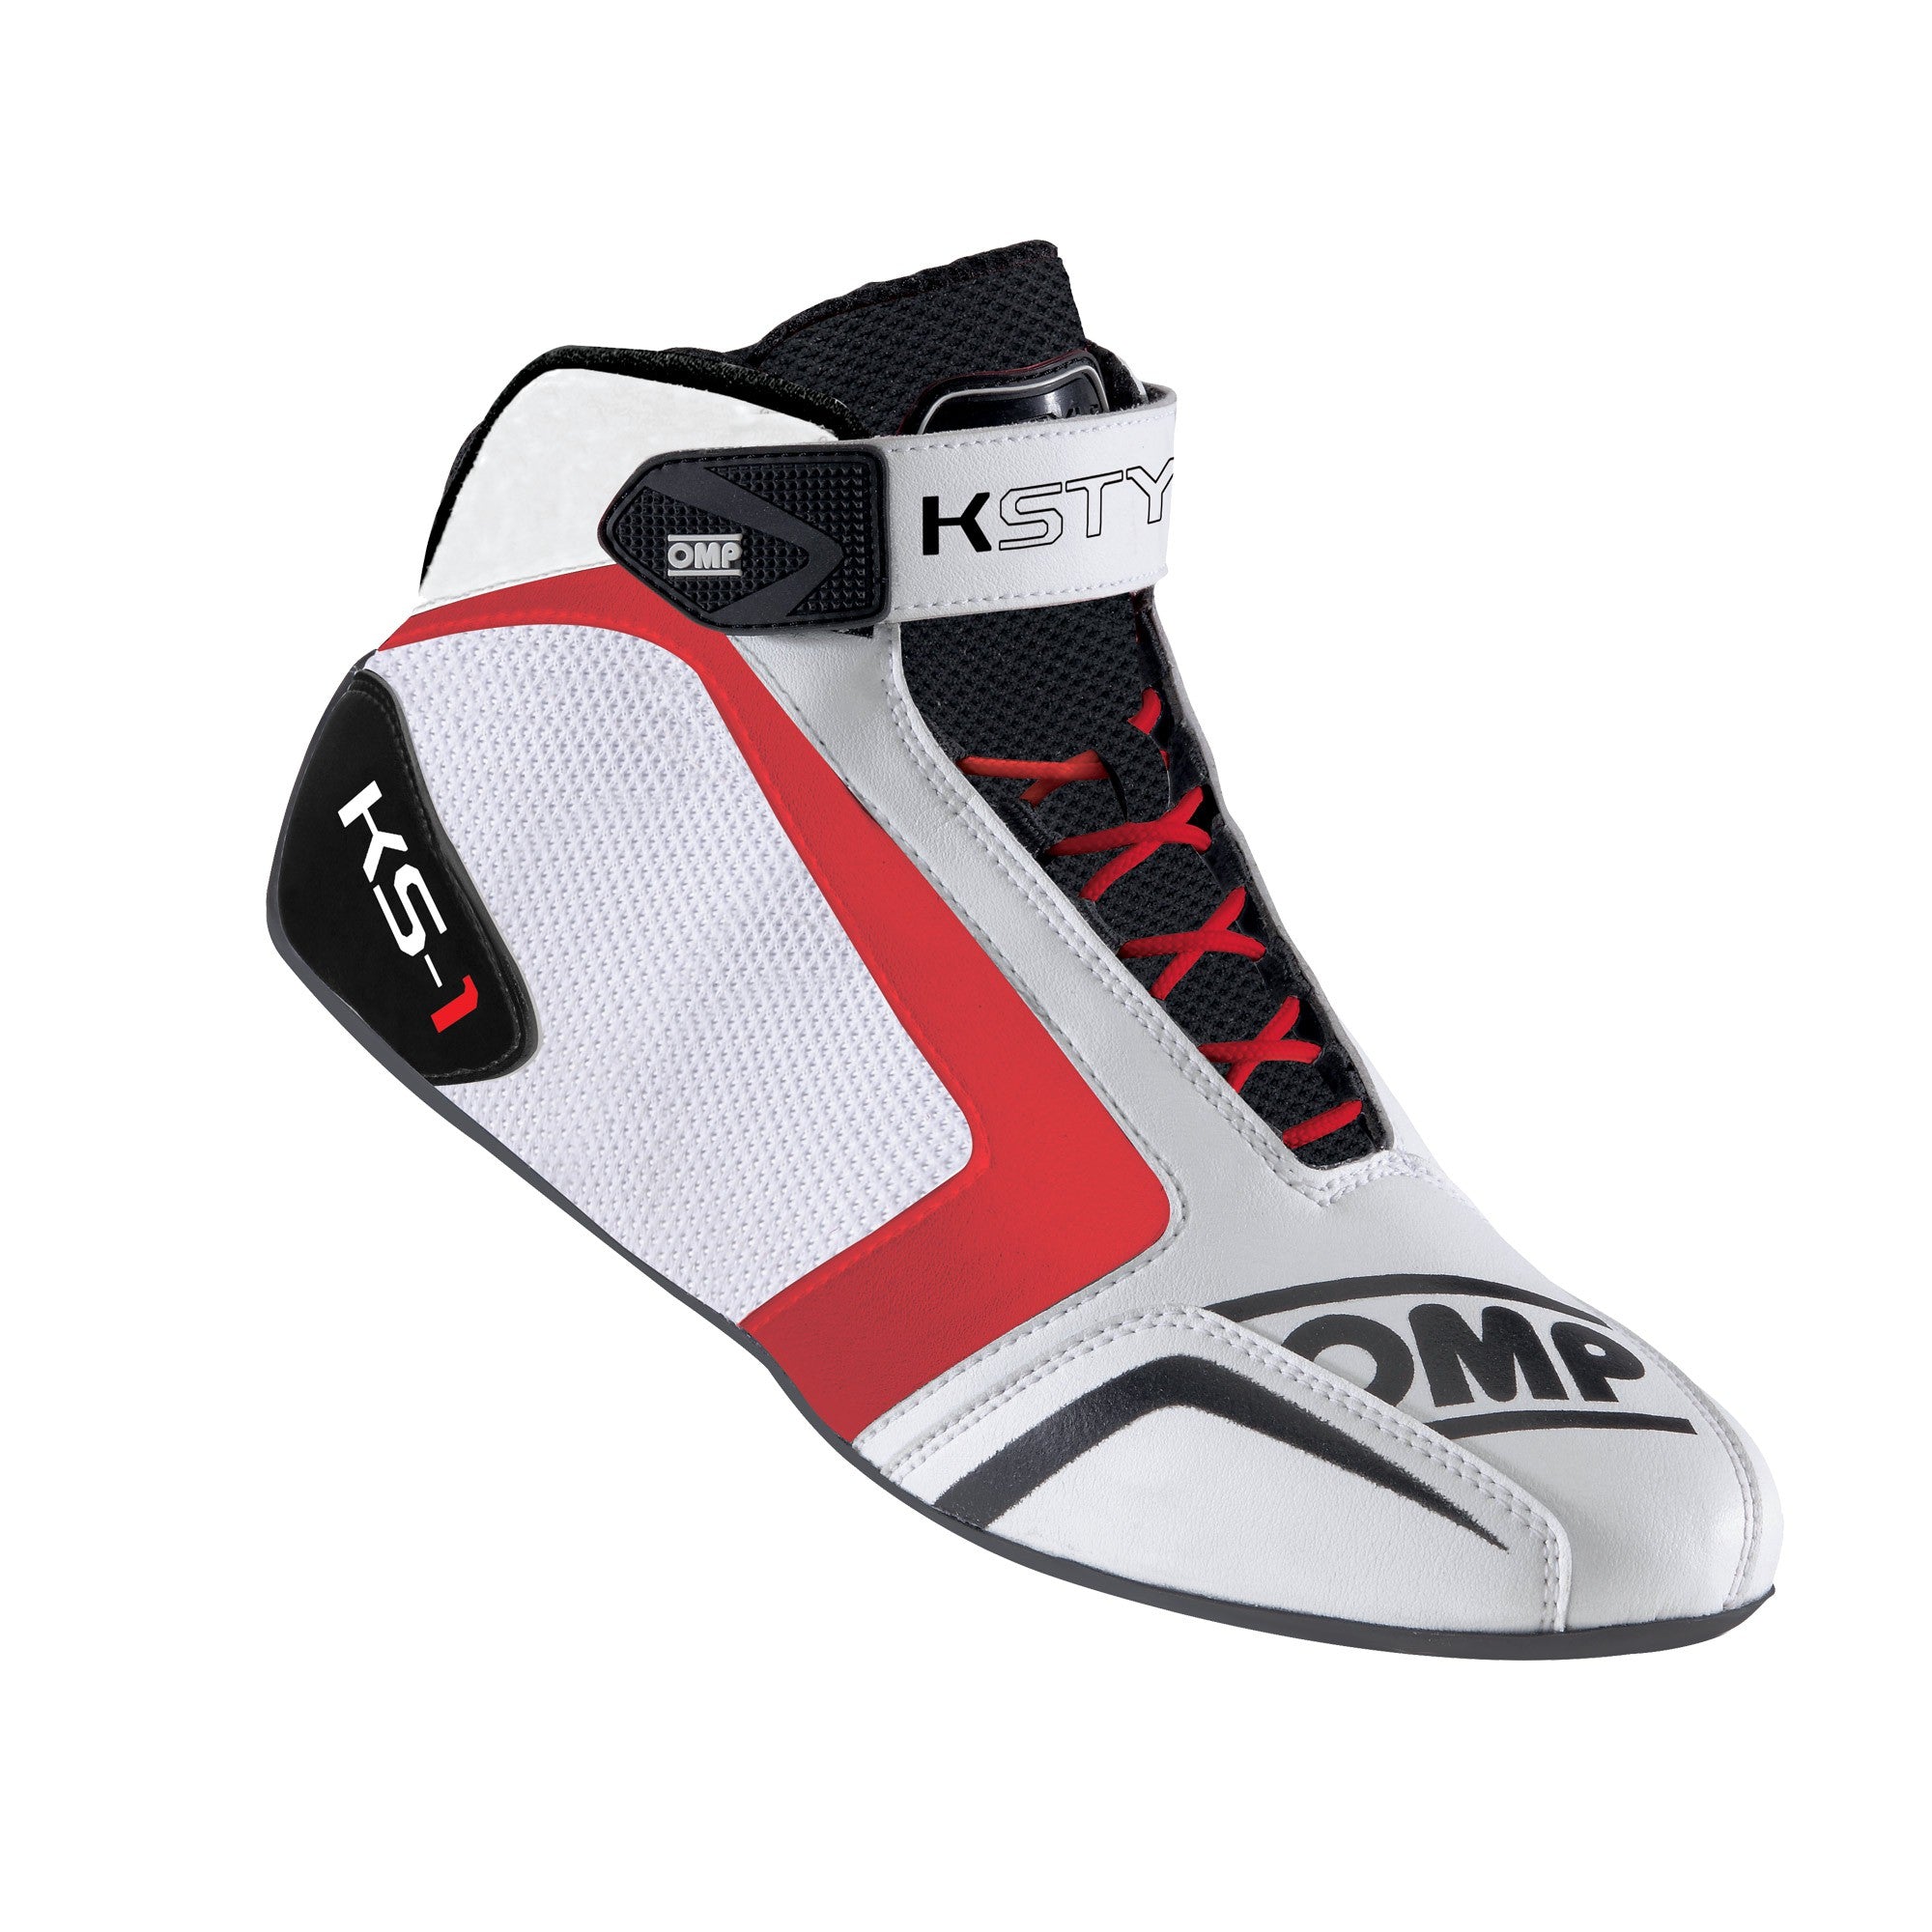 OMP KC0-0815-A01-120-37 (IC/81512037) Kart shoes KS-1, white/black/red, size 37 Photo-0 